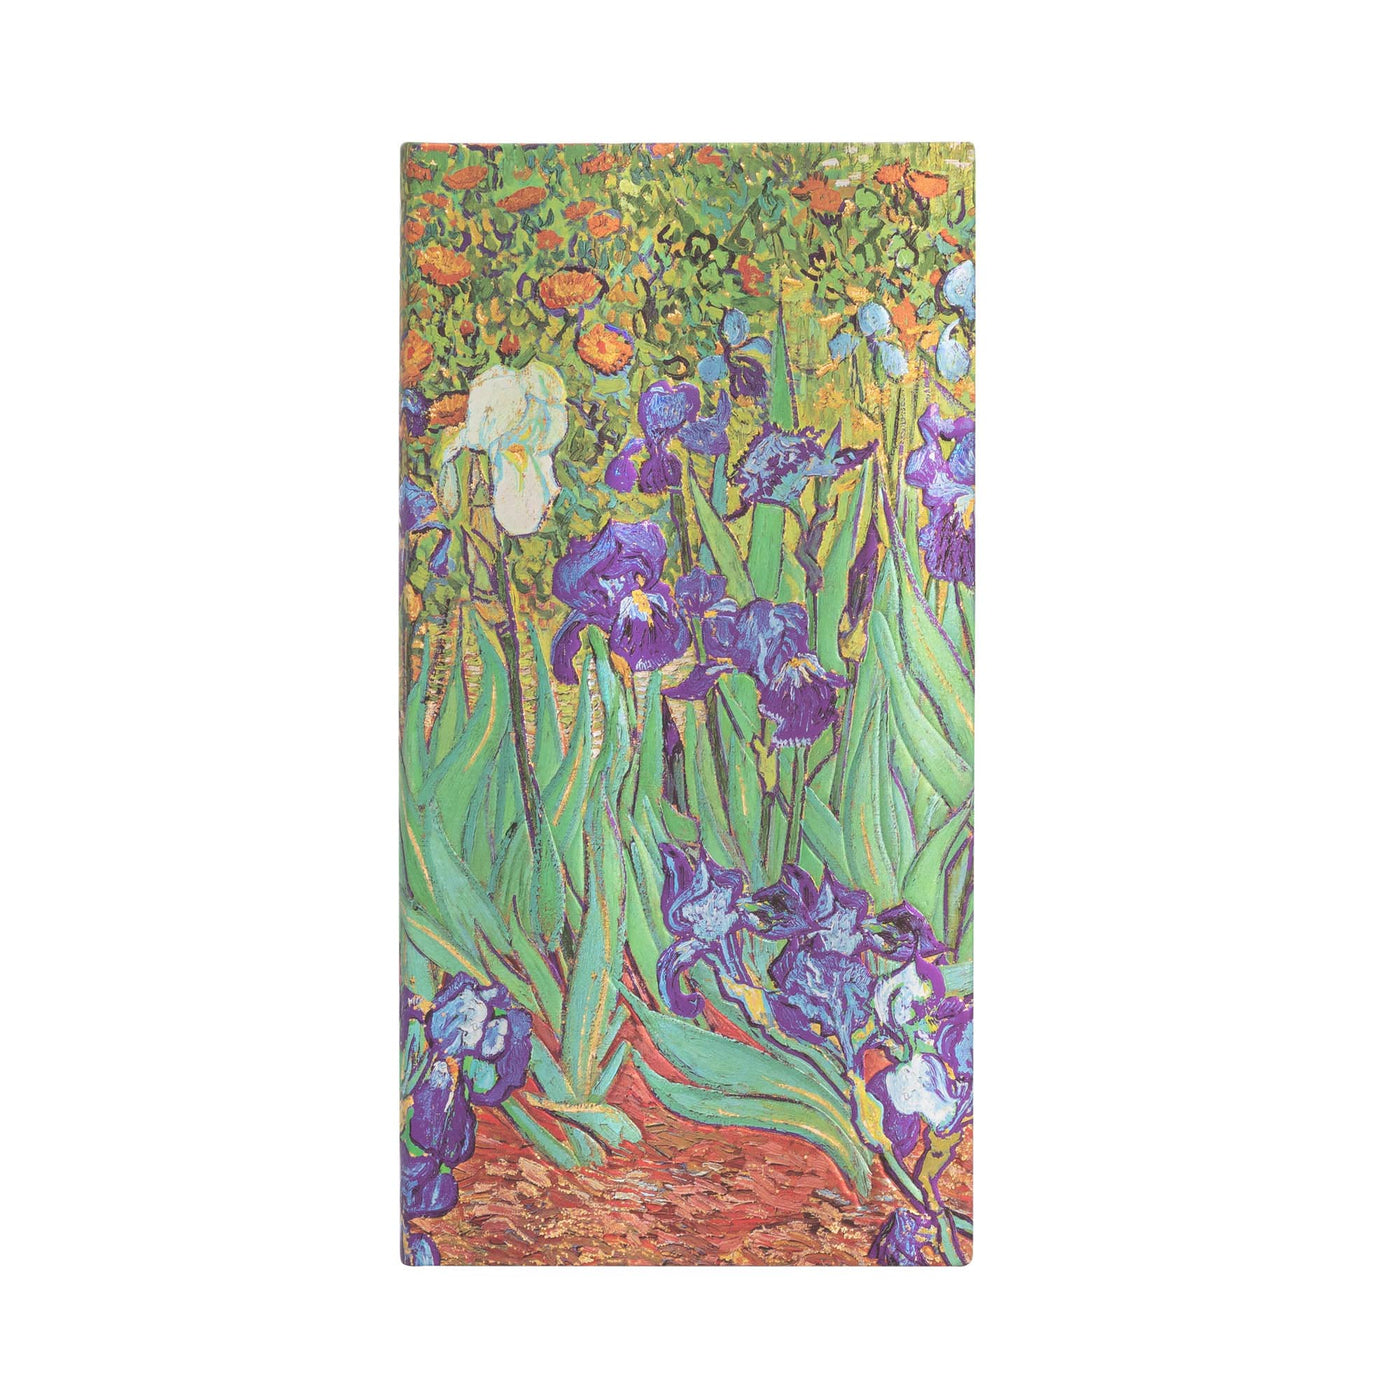 Paperblanks Slim Van Gogh's Irises  3.75 x 7 Inches Journal